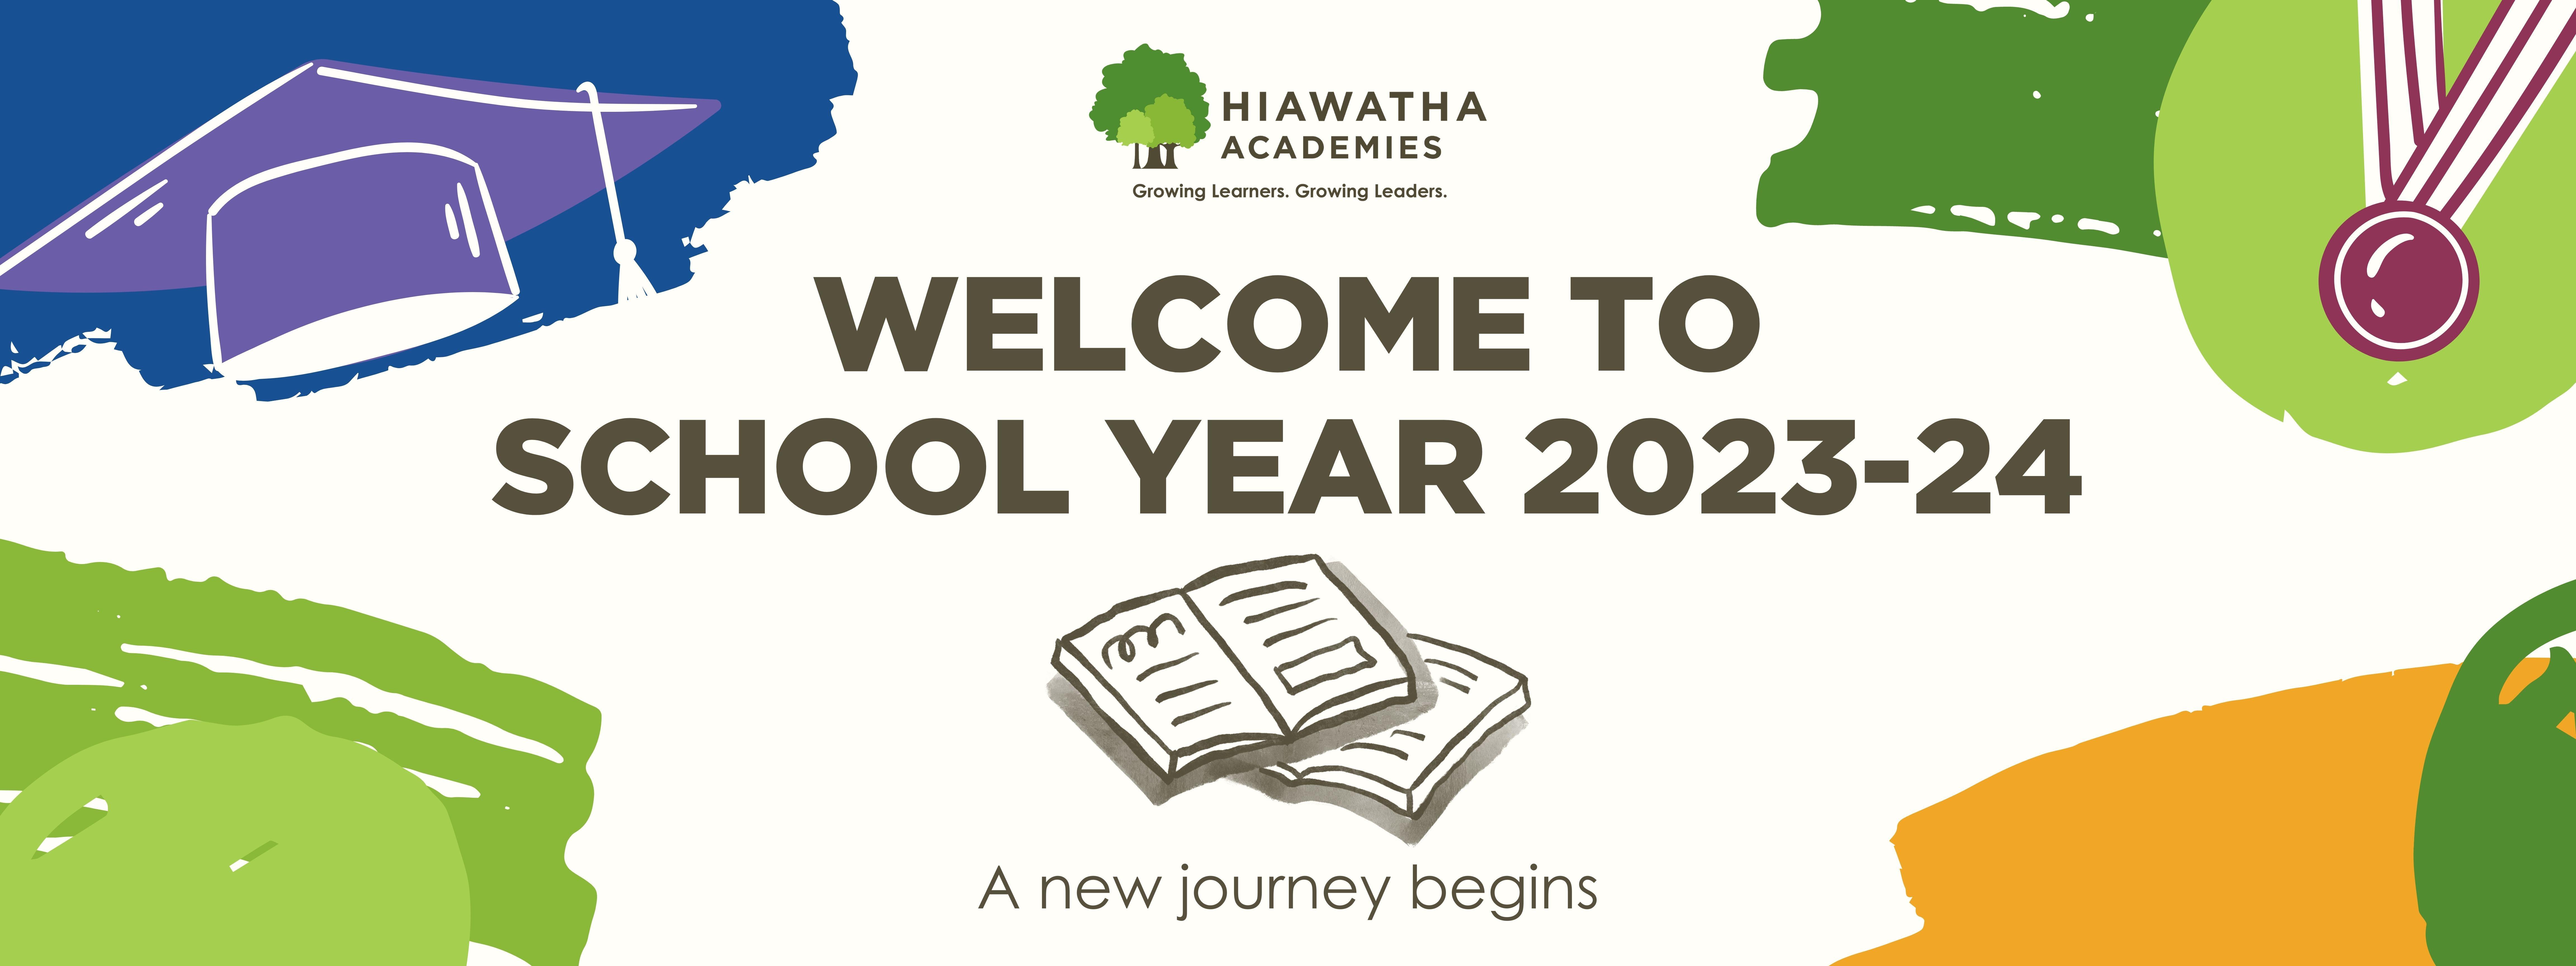 Welcome to Hiawatha Academies